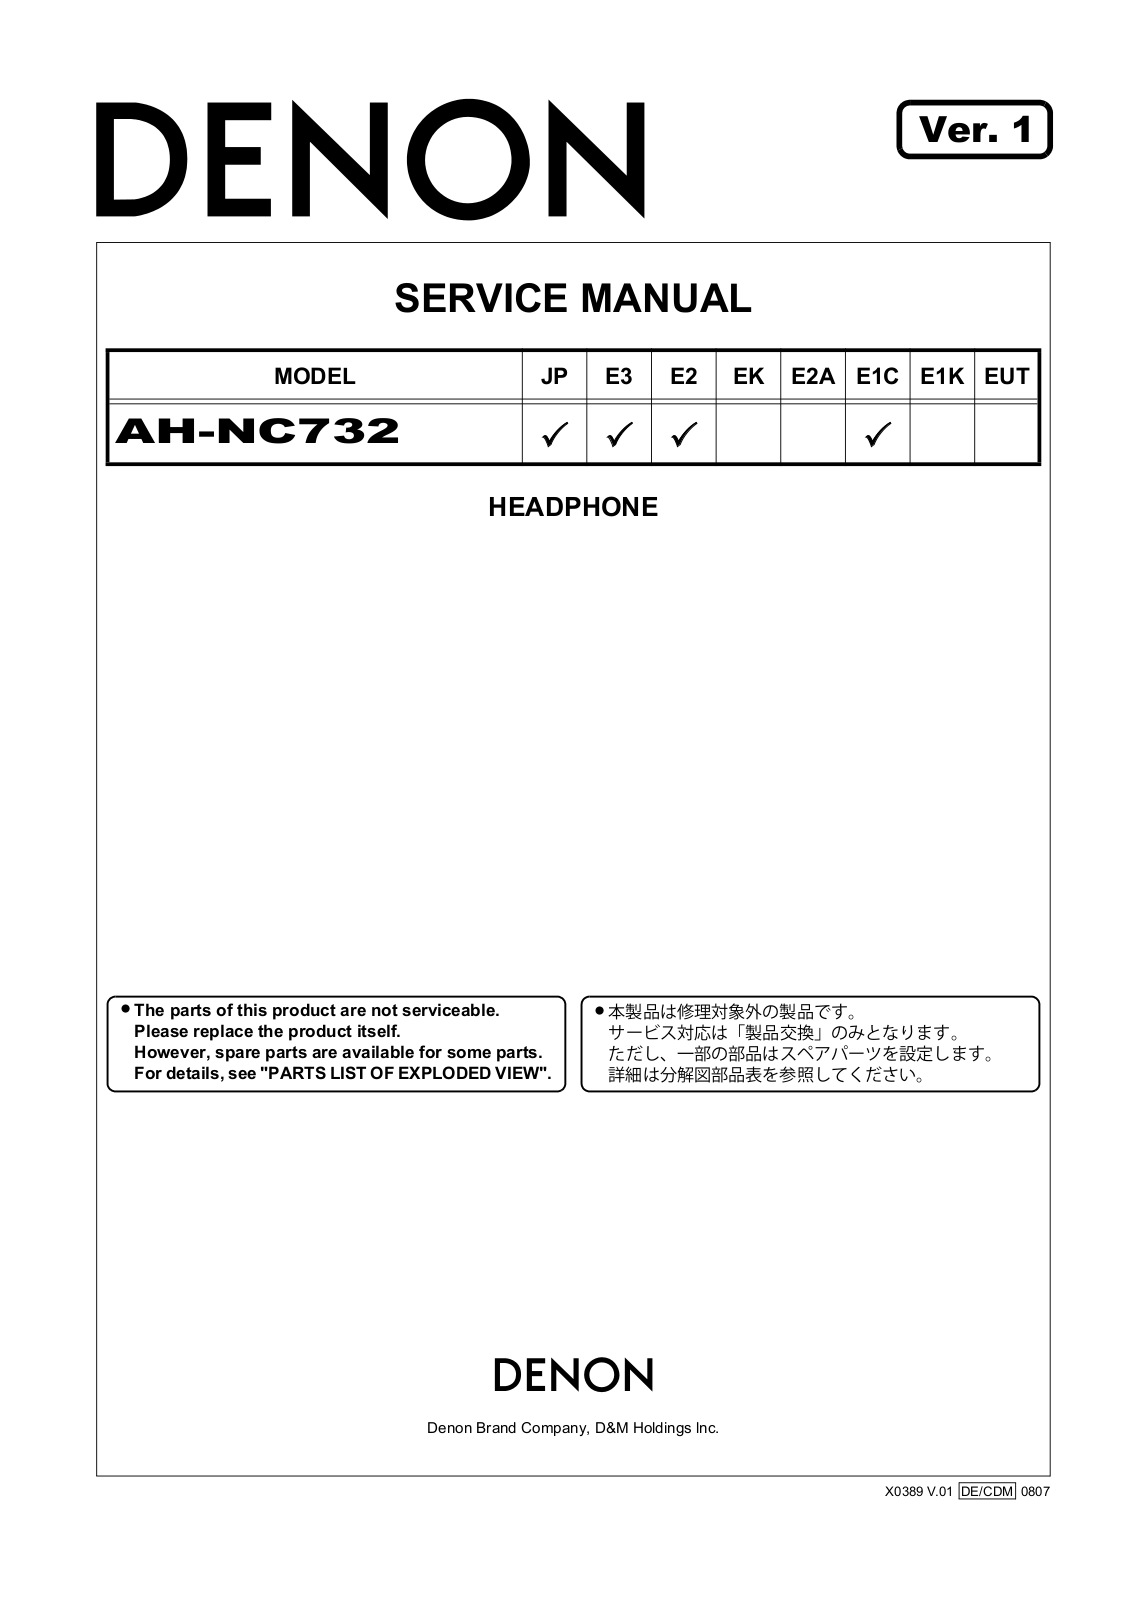 Denon AH-NC732 Service Bulletin